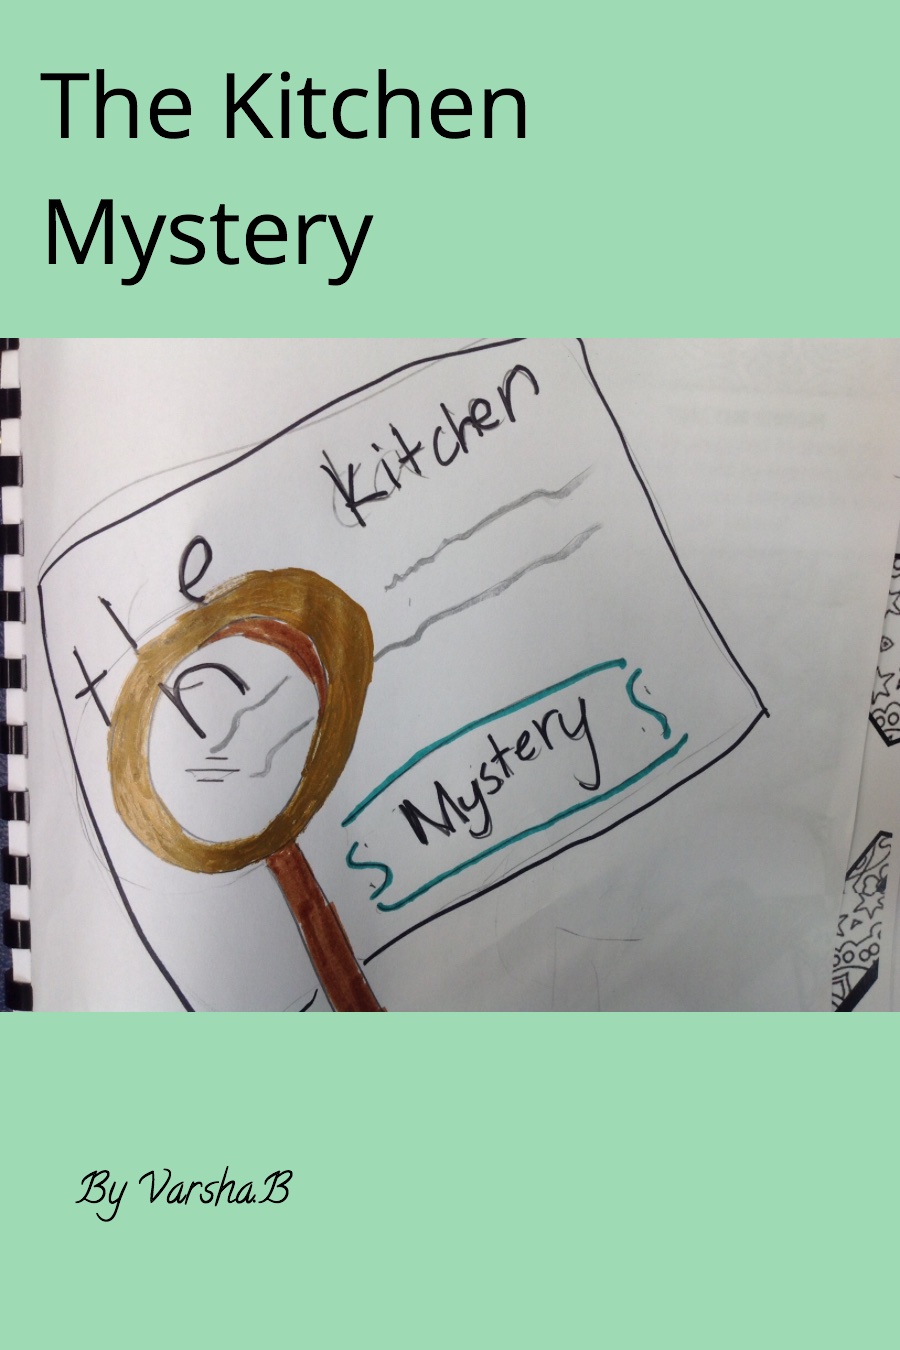 The Kitchen Mystery by Varsha B